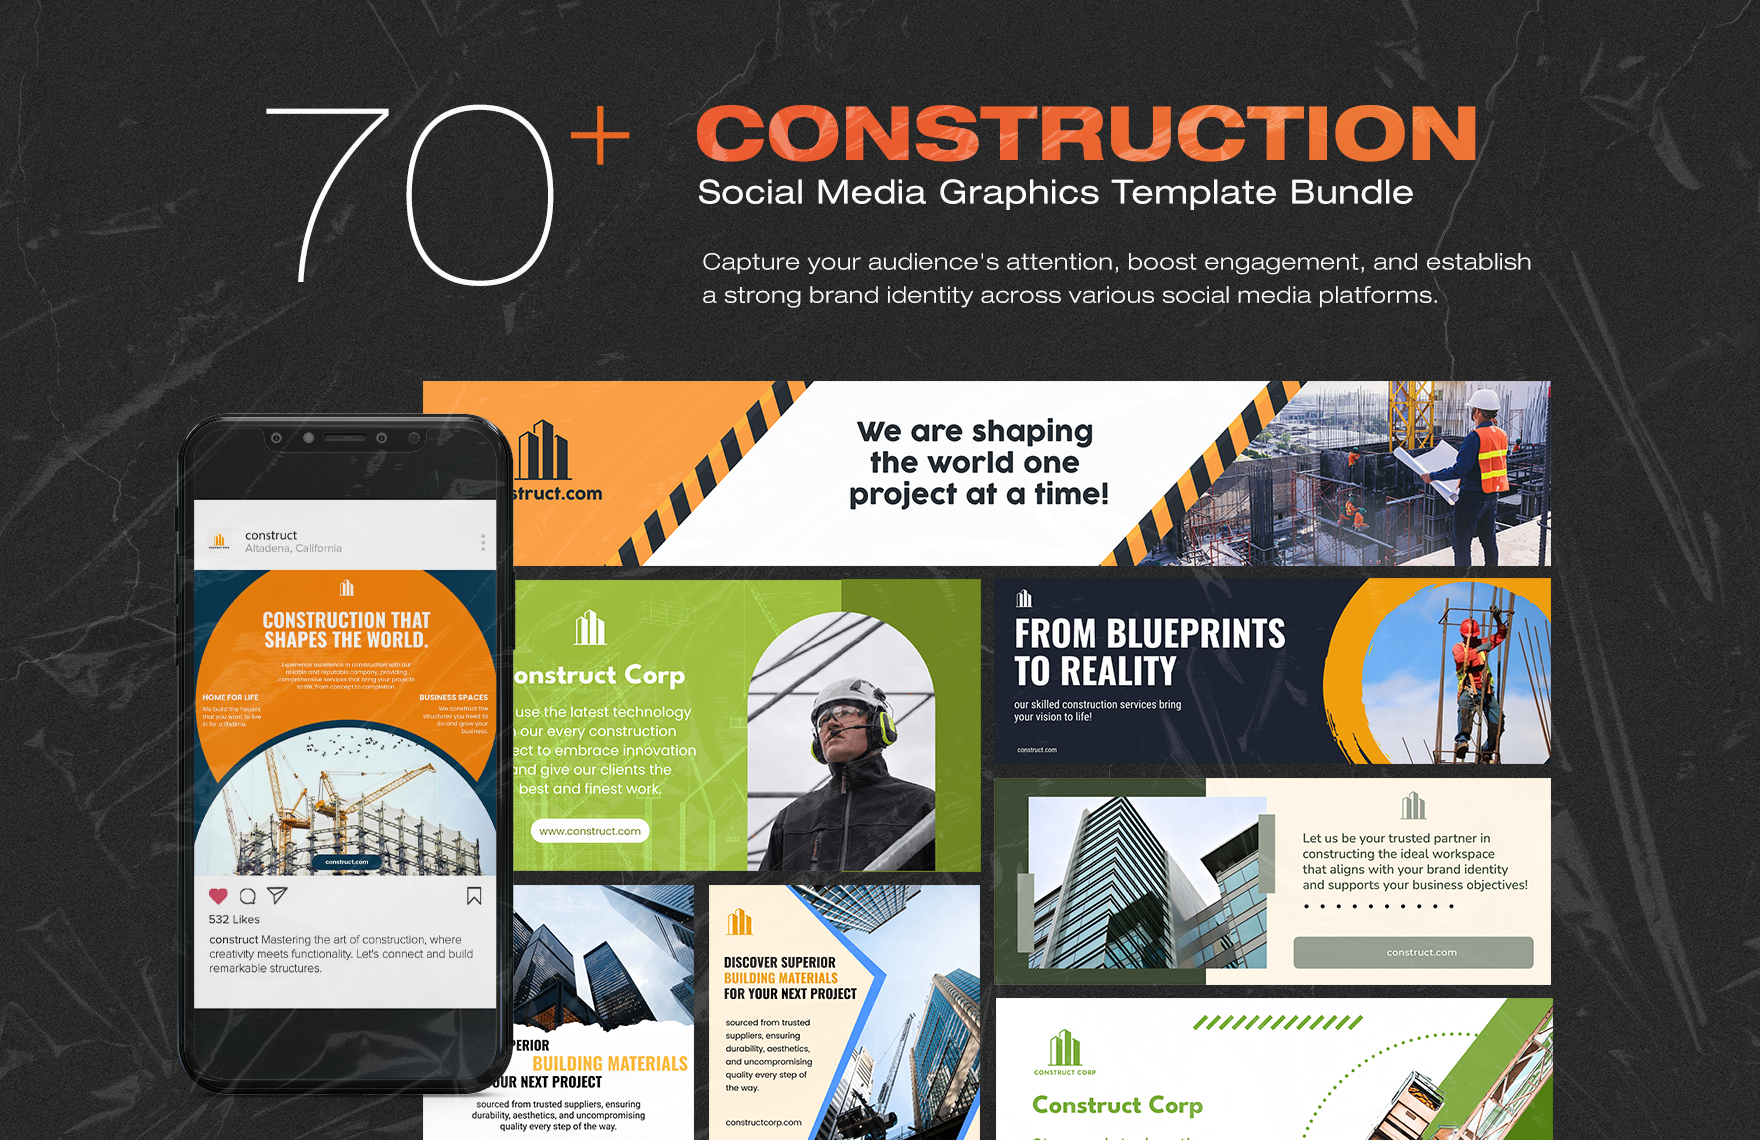 70+ Construction Social Media Graphics Template Bundle